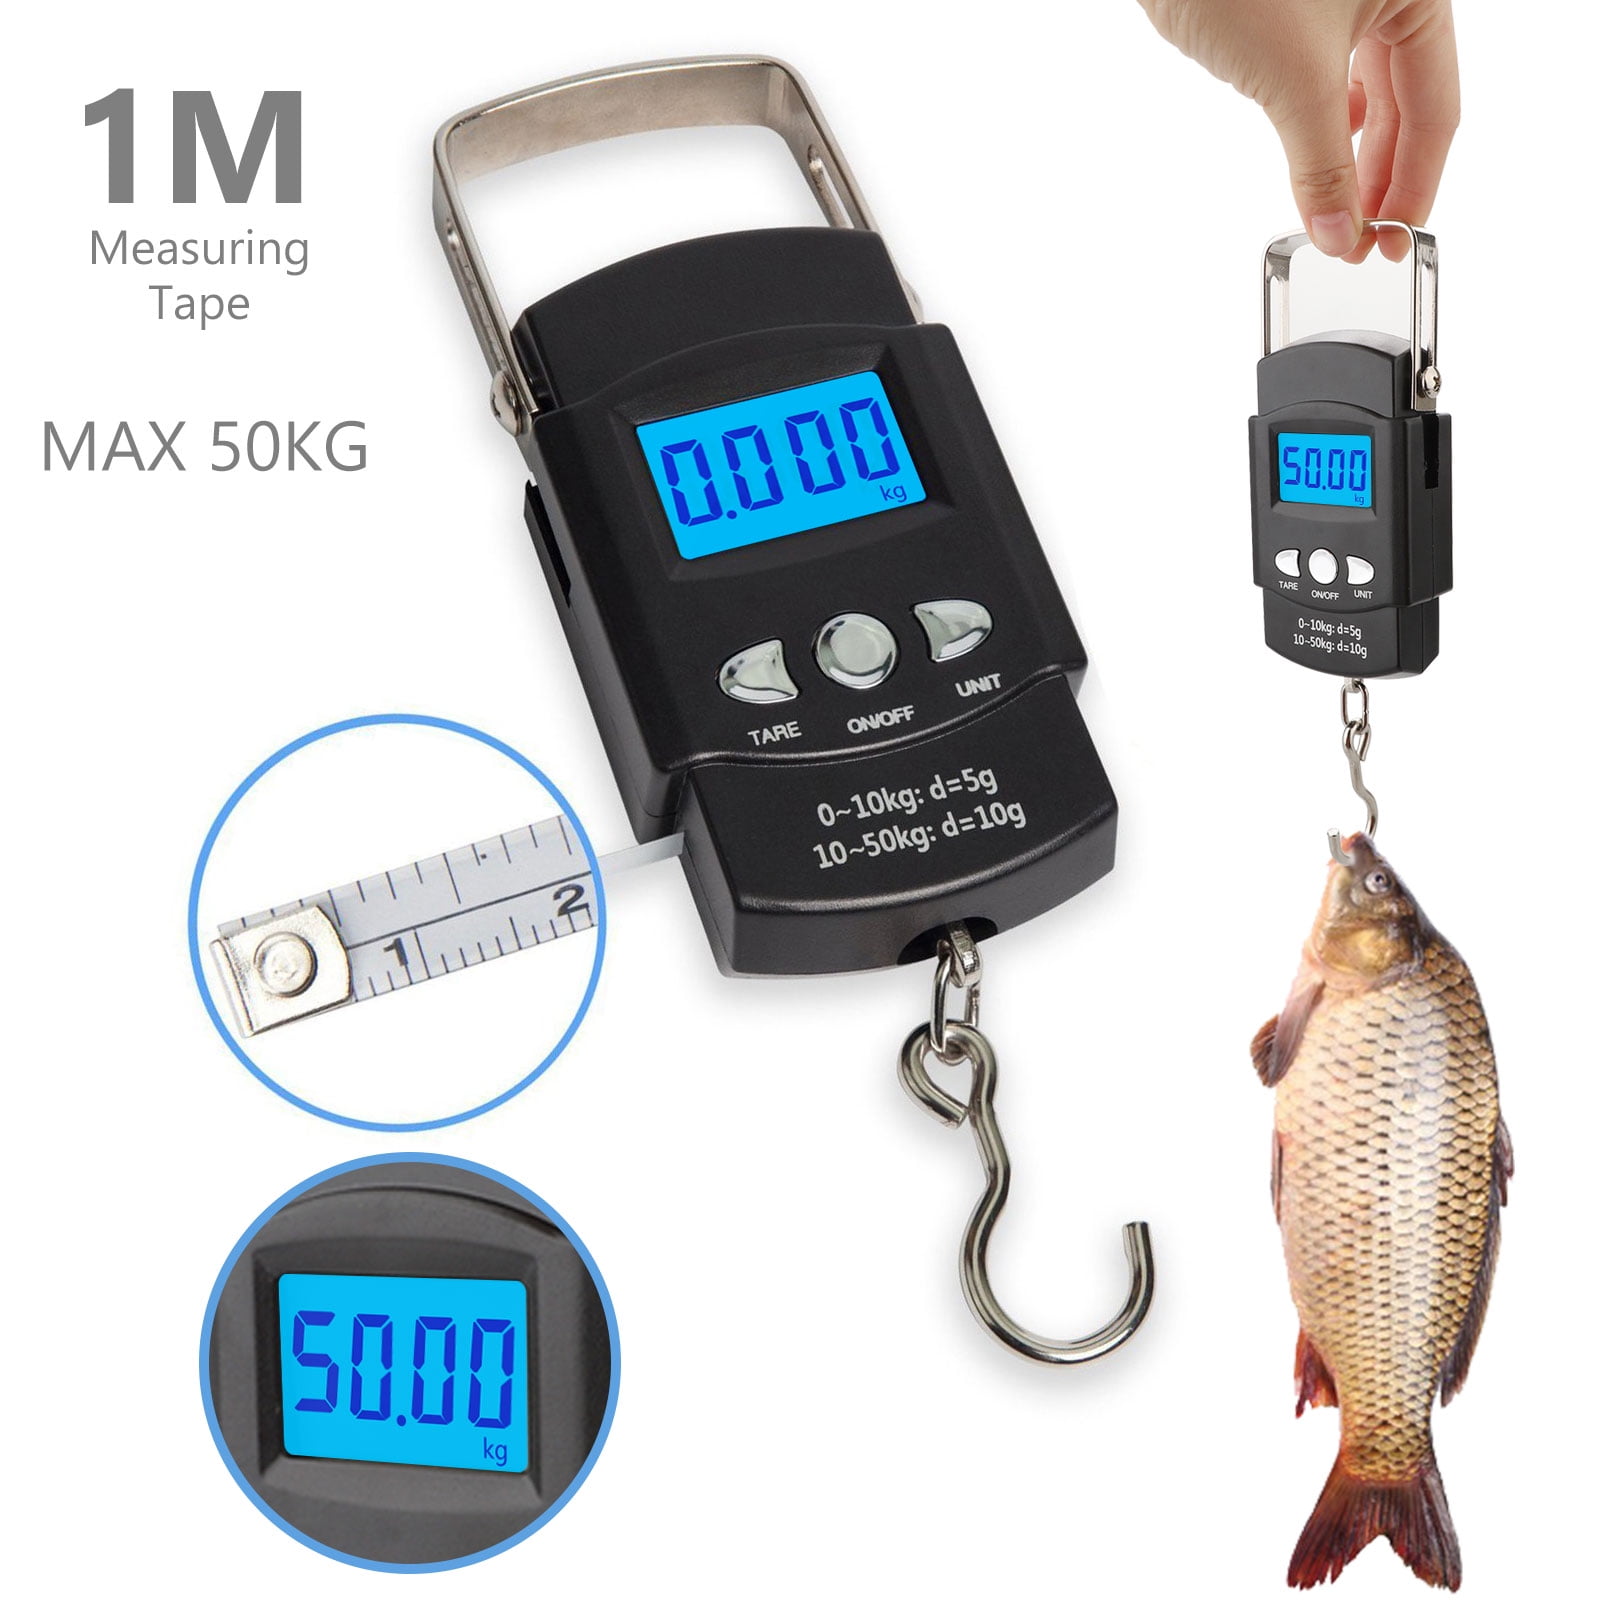 BERKLEY Fishing Gear Portable Digital Scale 50lb w/Batteries BTDFS50-1 1318379 